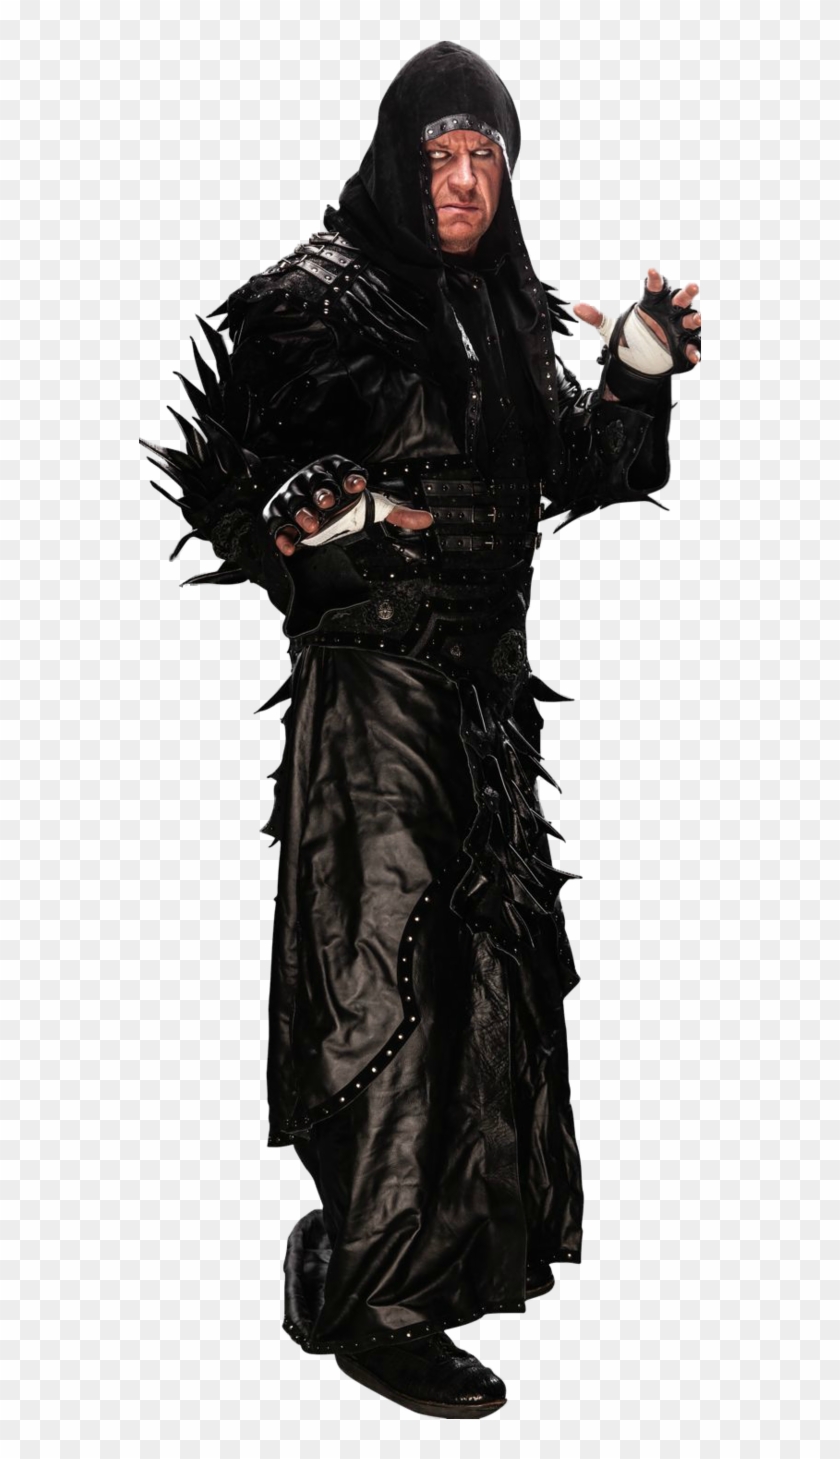 The Undertaker - Undertaker Wwe Costumes Clipart #3822560